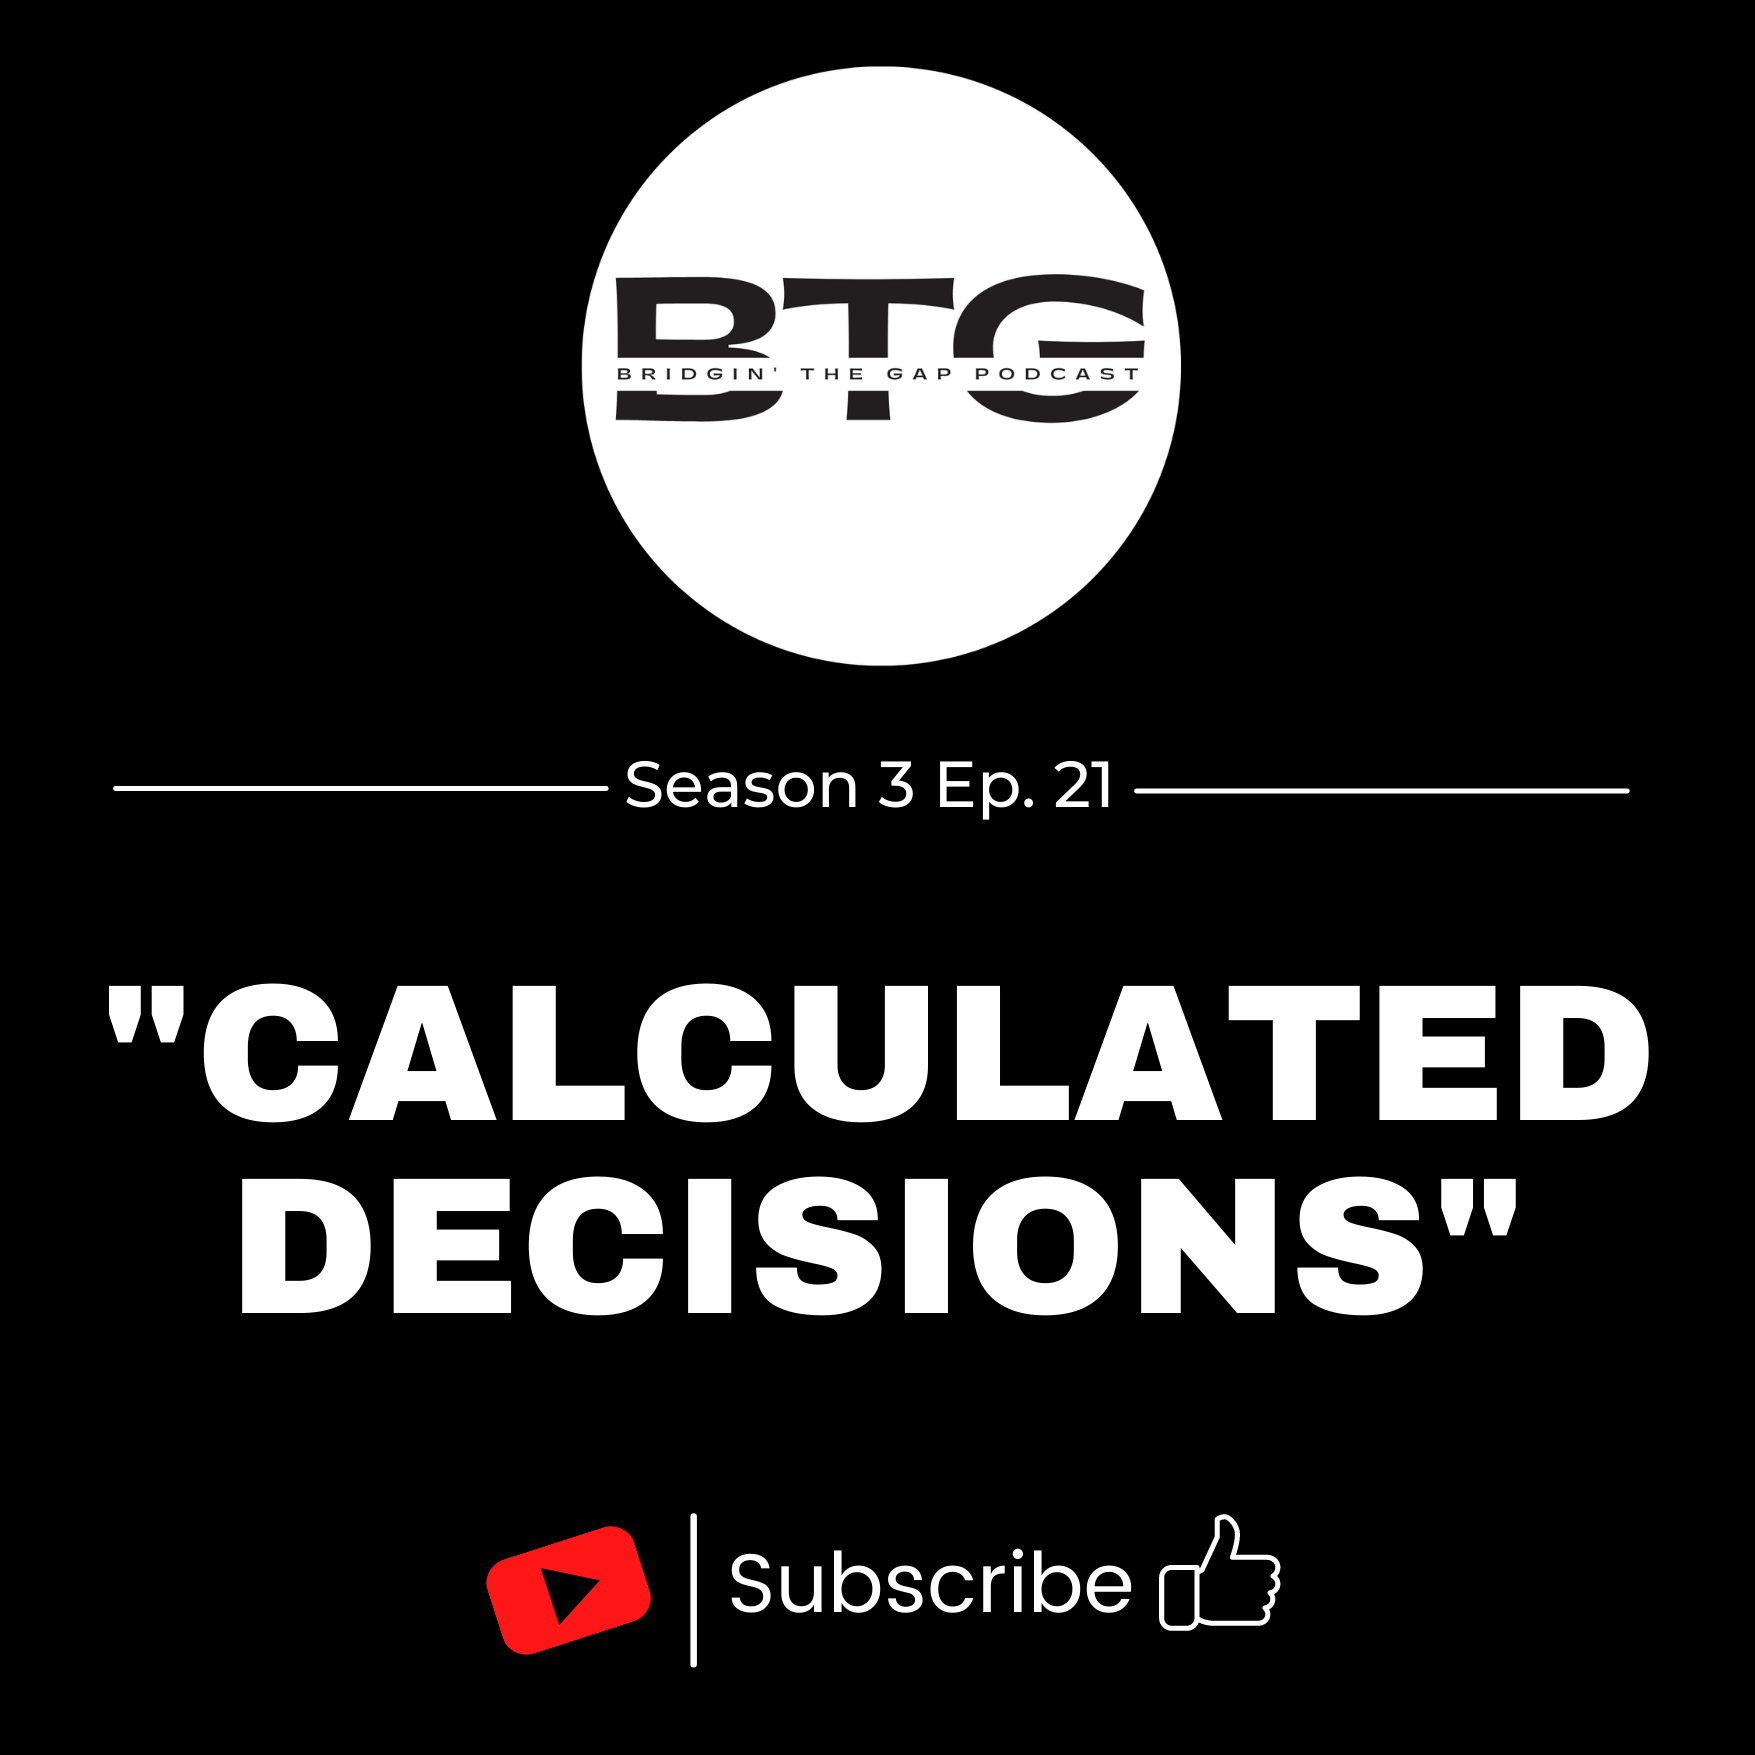 Bridgin' The Gap Podcast Season 3 Ep. 21 "Calculated Decisions"